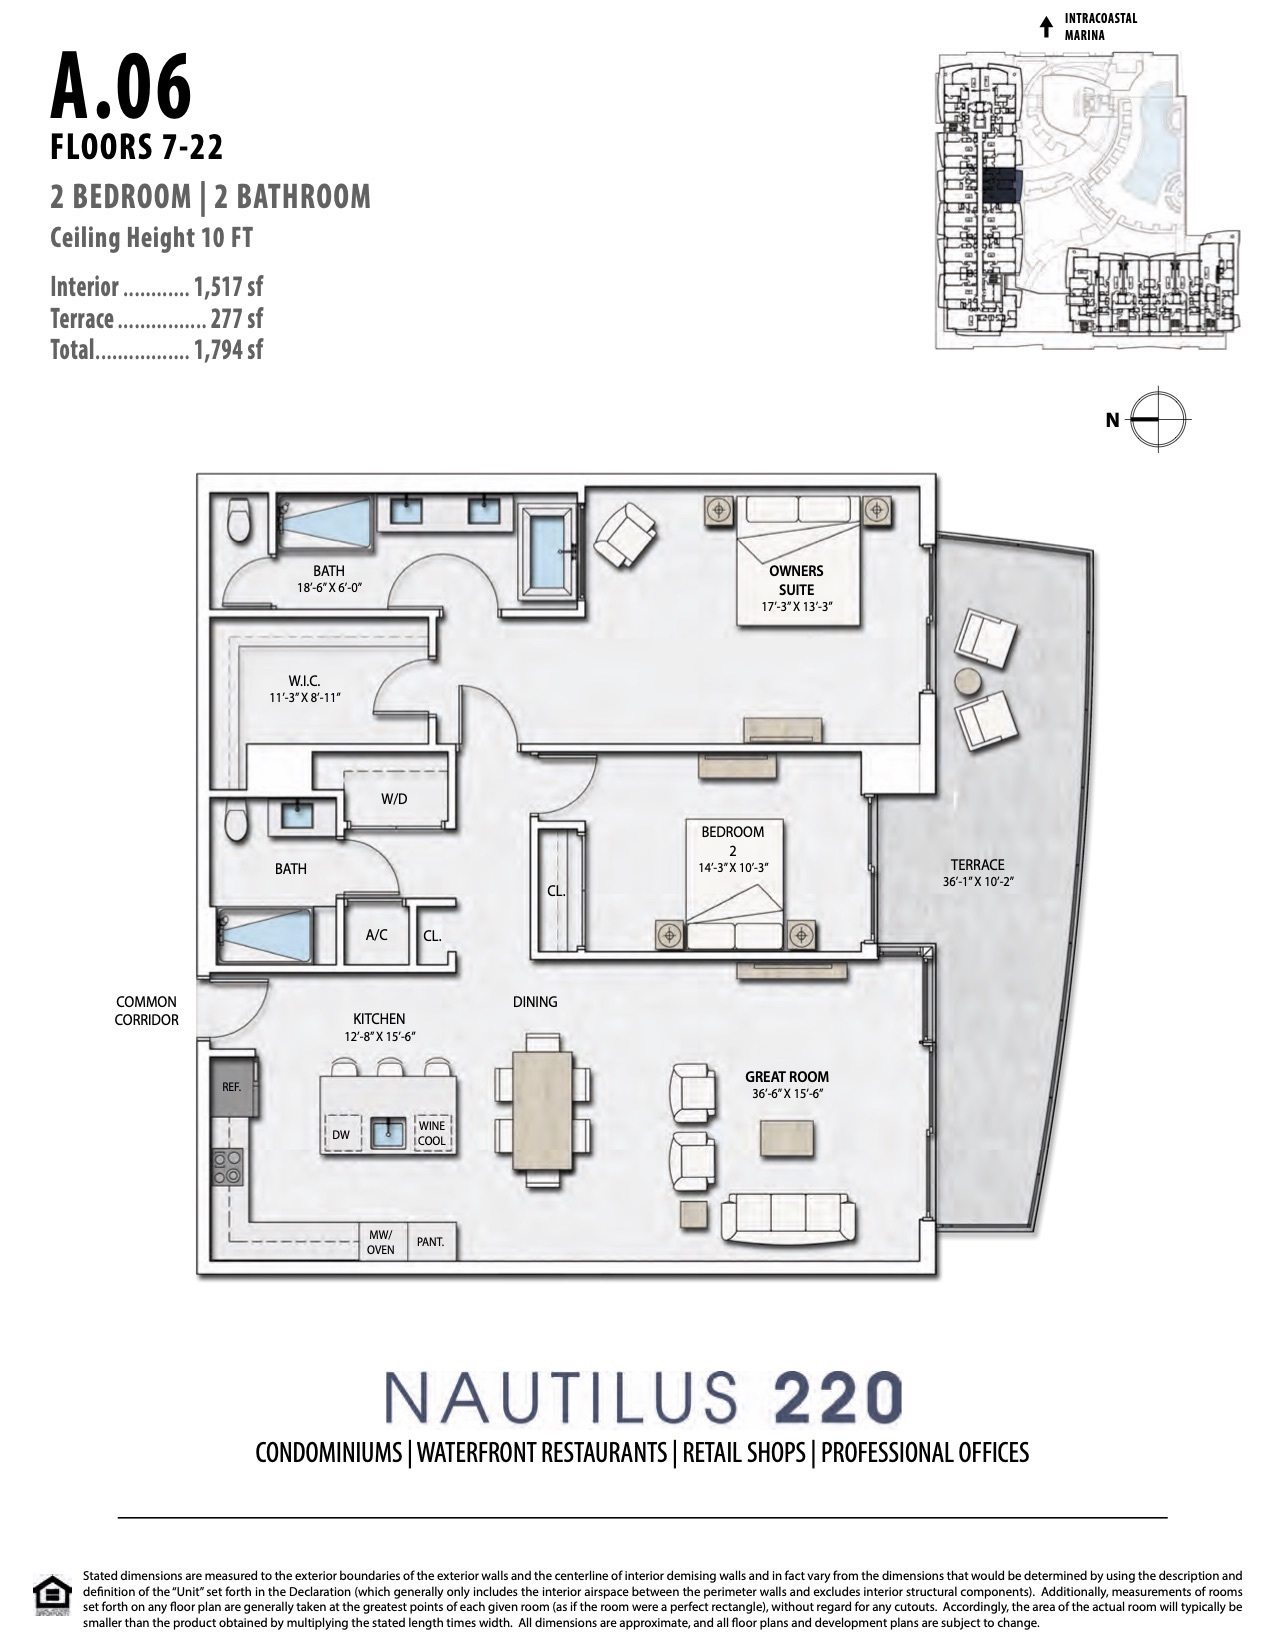 Floor Plan for Nautilus 220 Floorplans, A.06